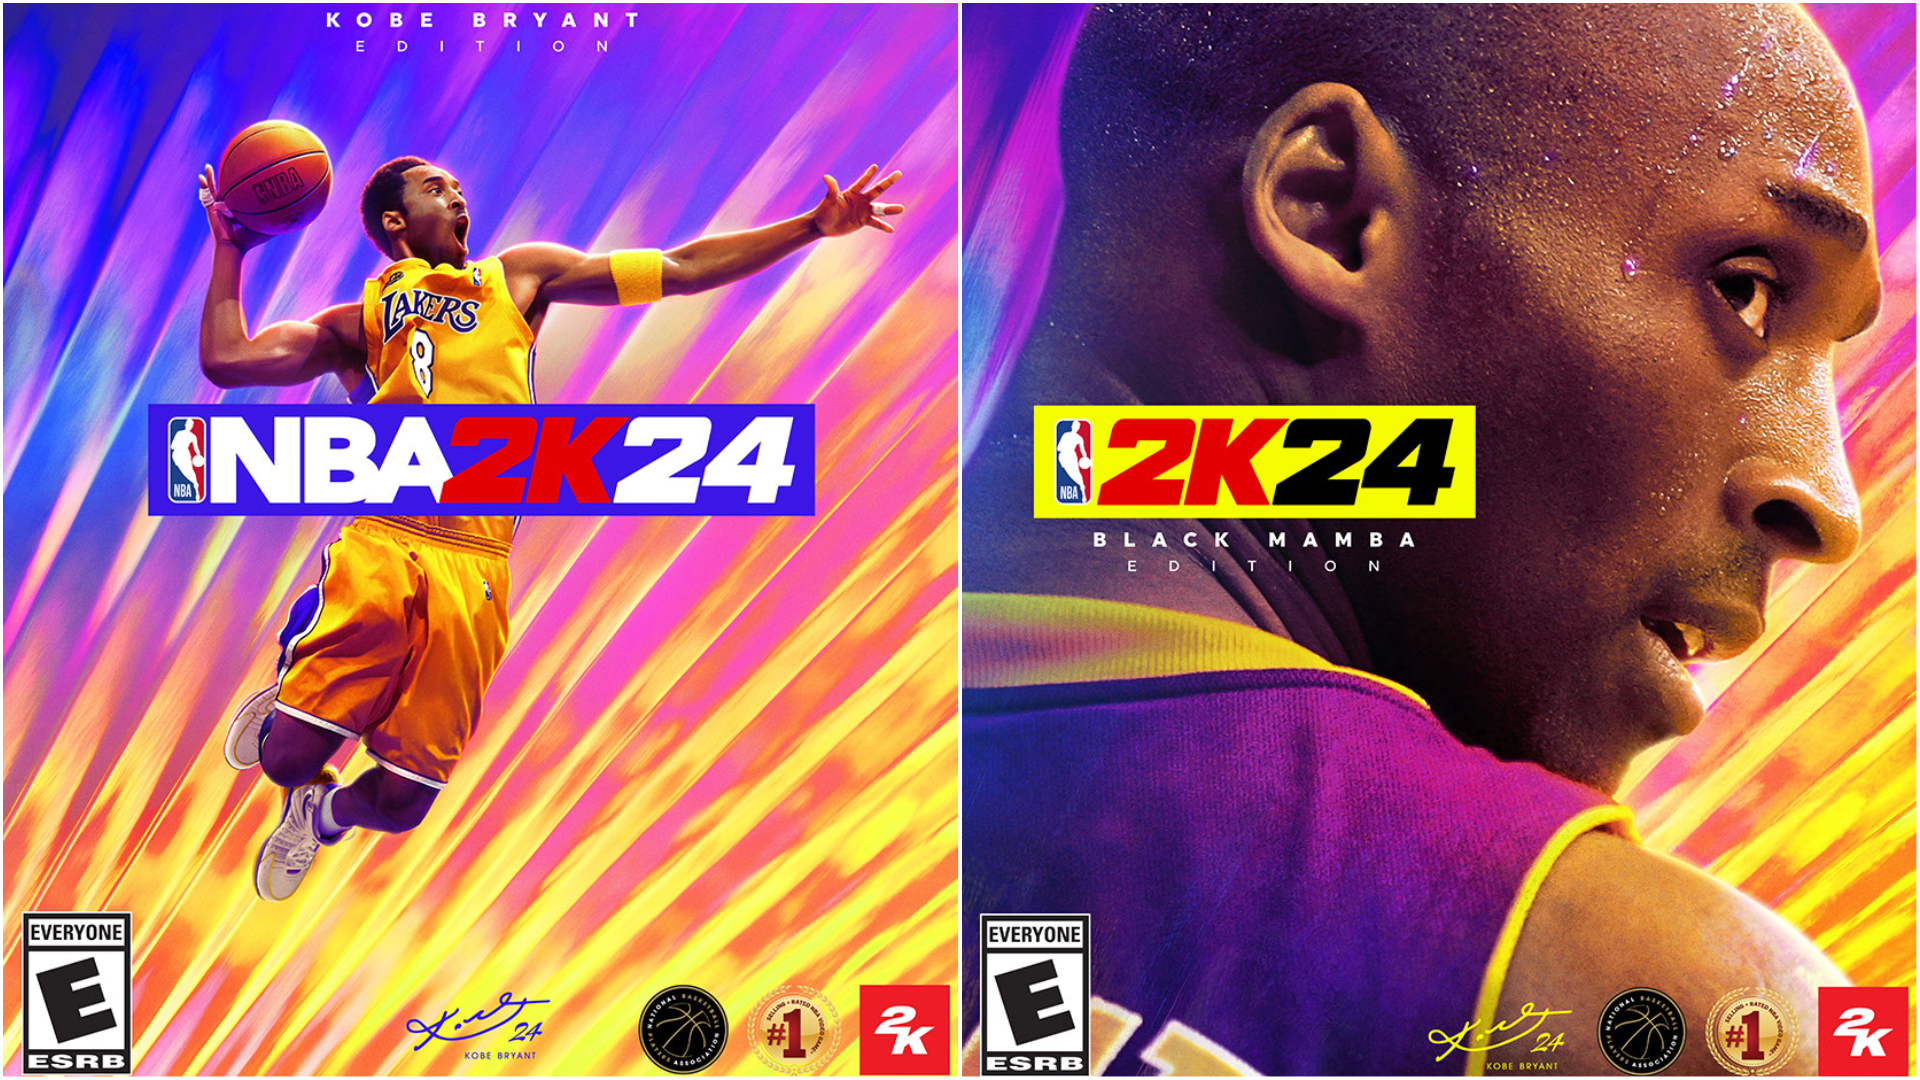 NBA 2K24 Kobe Bryant and Black Mamba Edition Covers Revealed